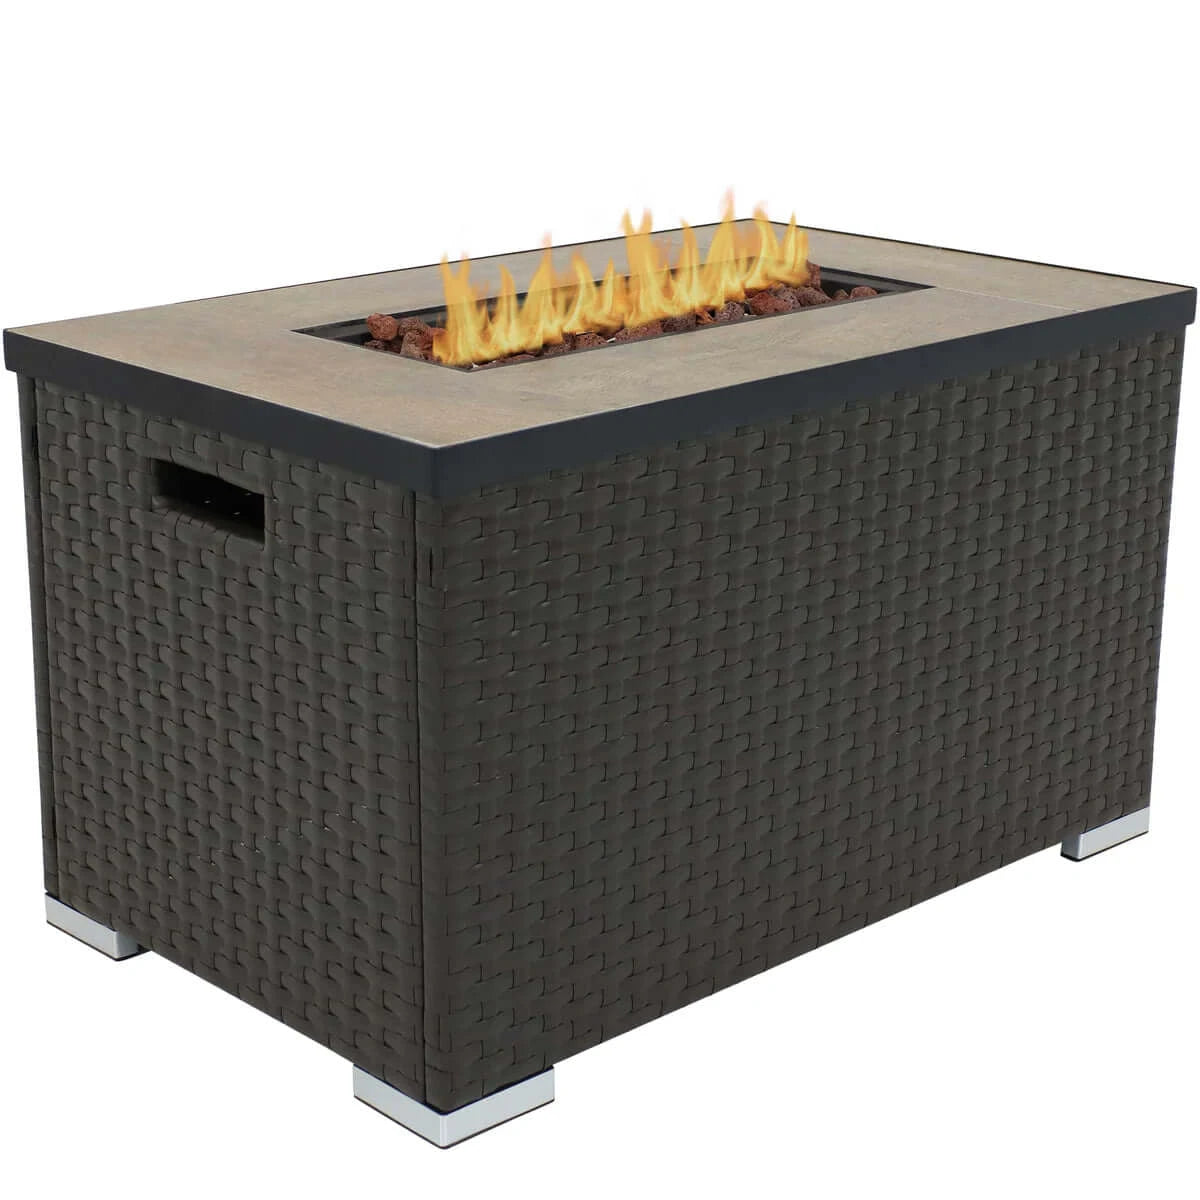 32" Tile Top Wicker Fire Pit Table | Resin Wicker and Lava Rocks | Smokeless